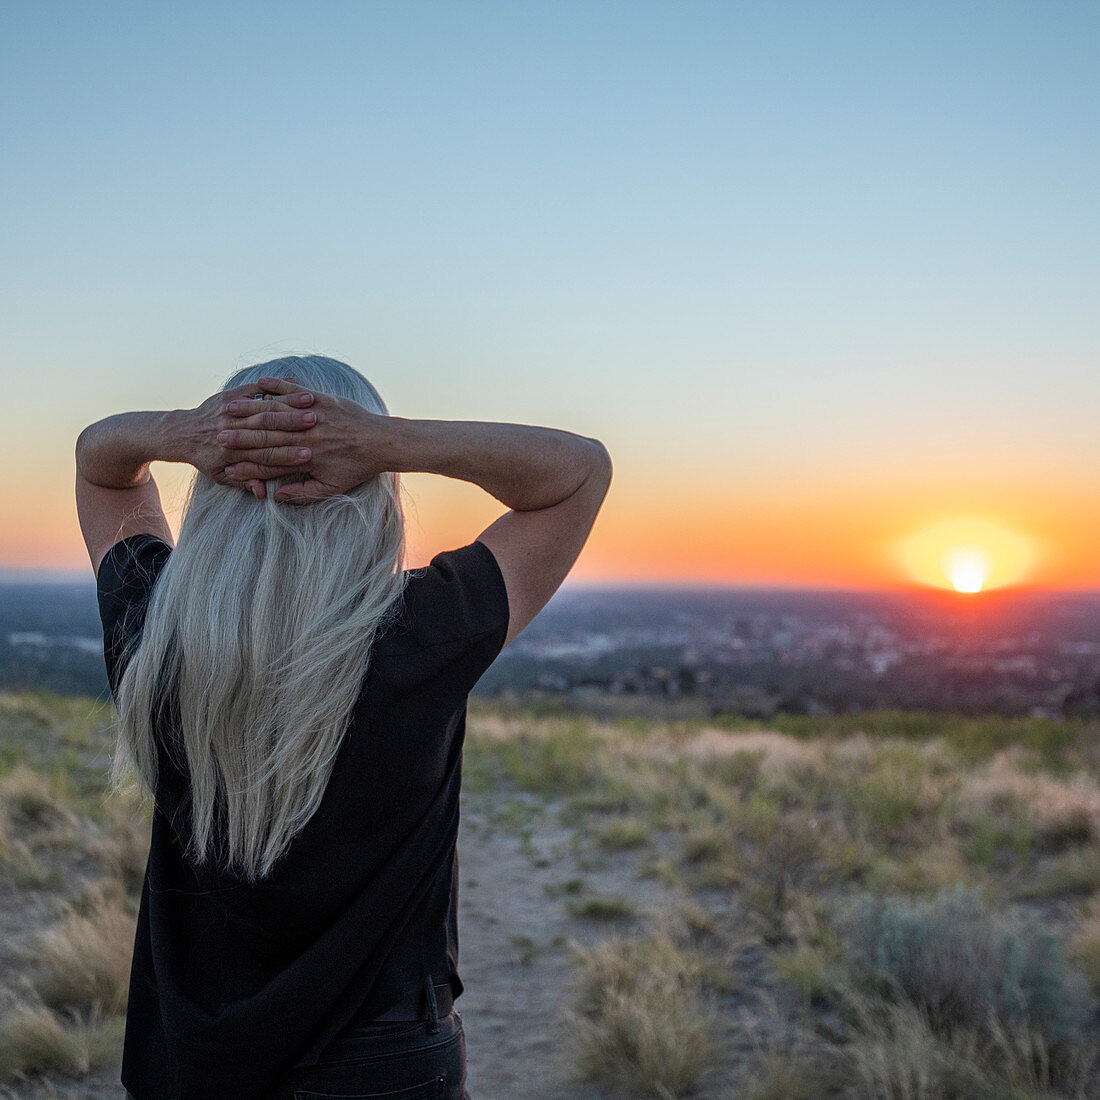 USA, Idaho, Boise, Woman looking at sunset